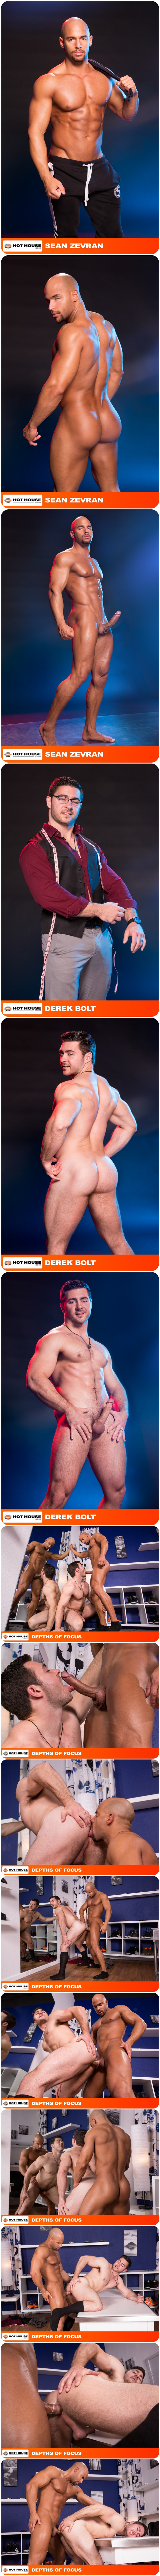 Hot House, Derek Bolt, Sean Zevran